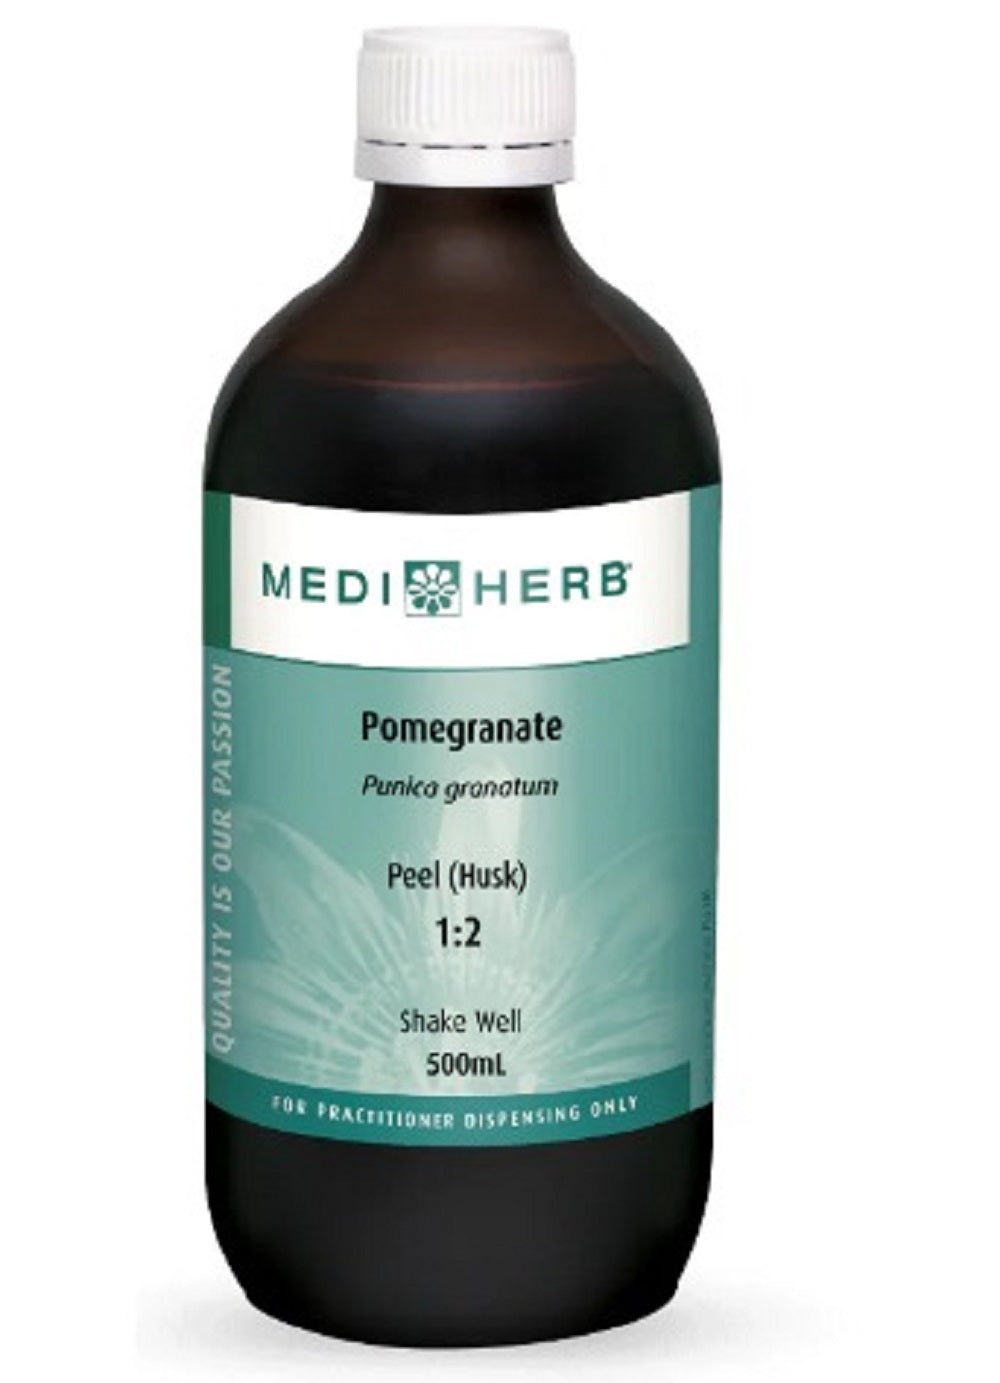 Medi Herb Pomegranate 1:2 500ml